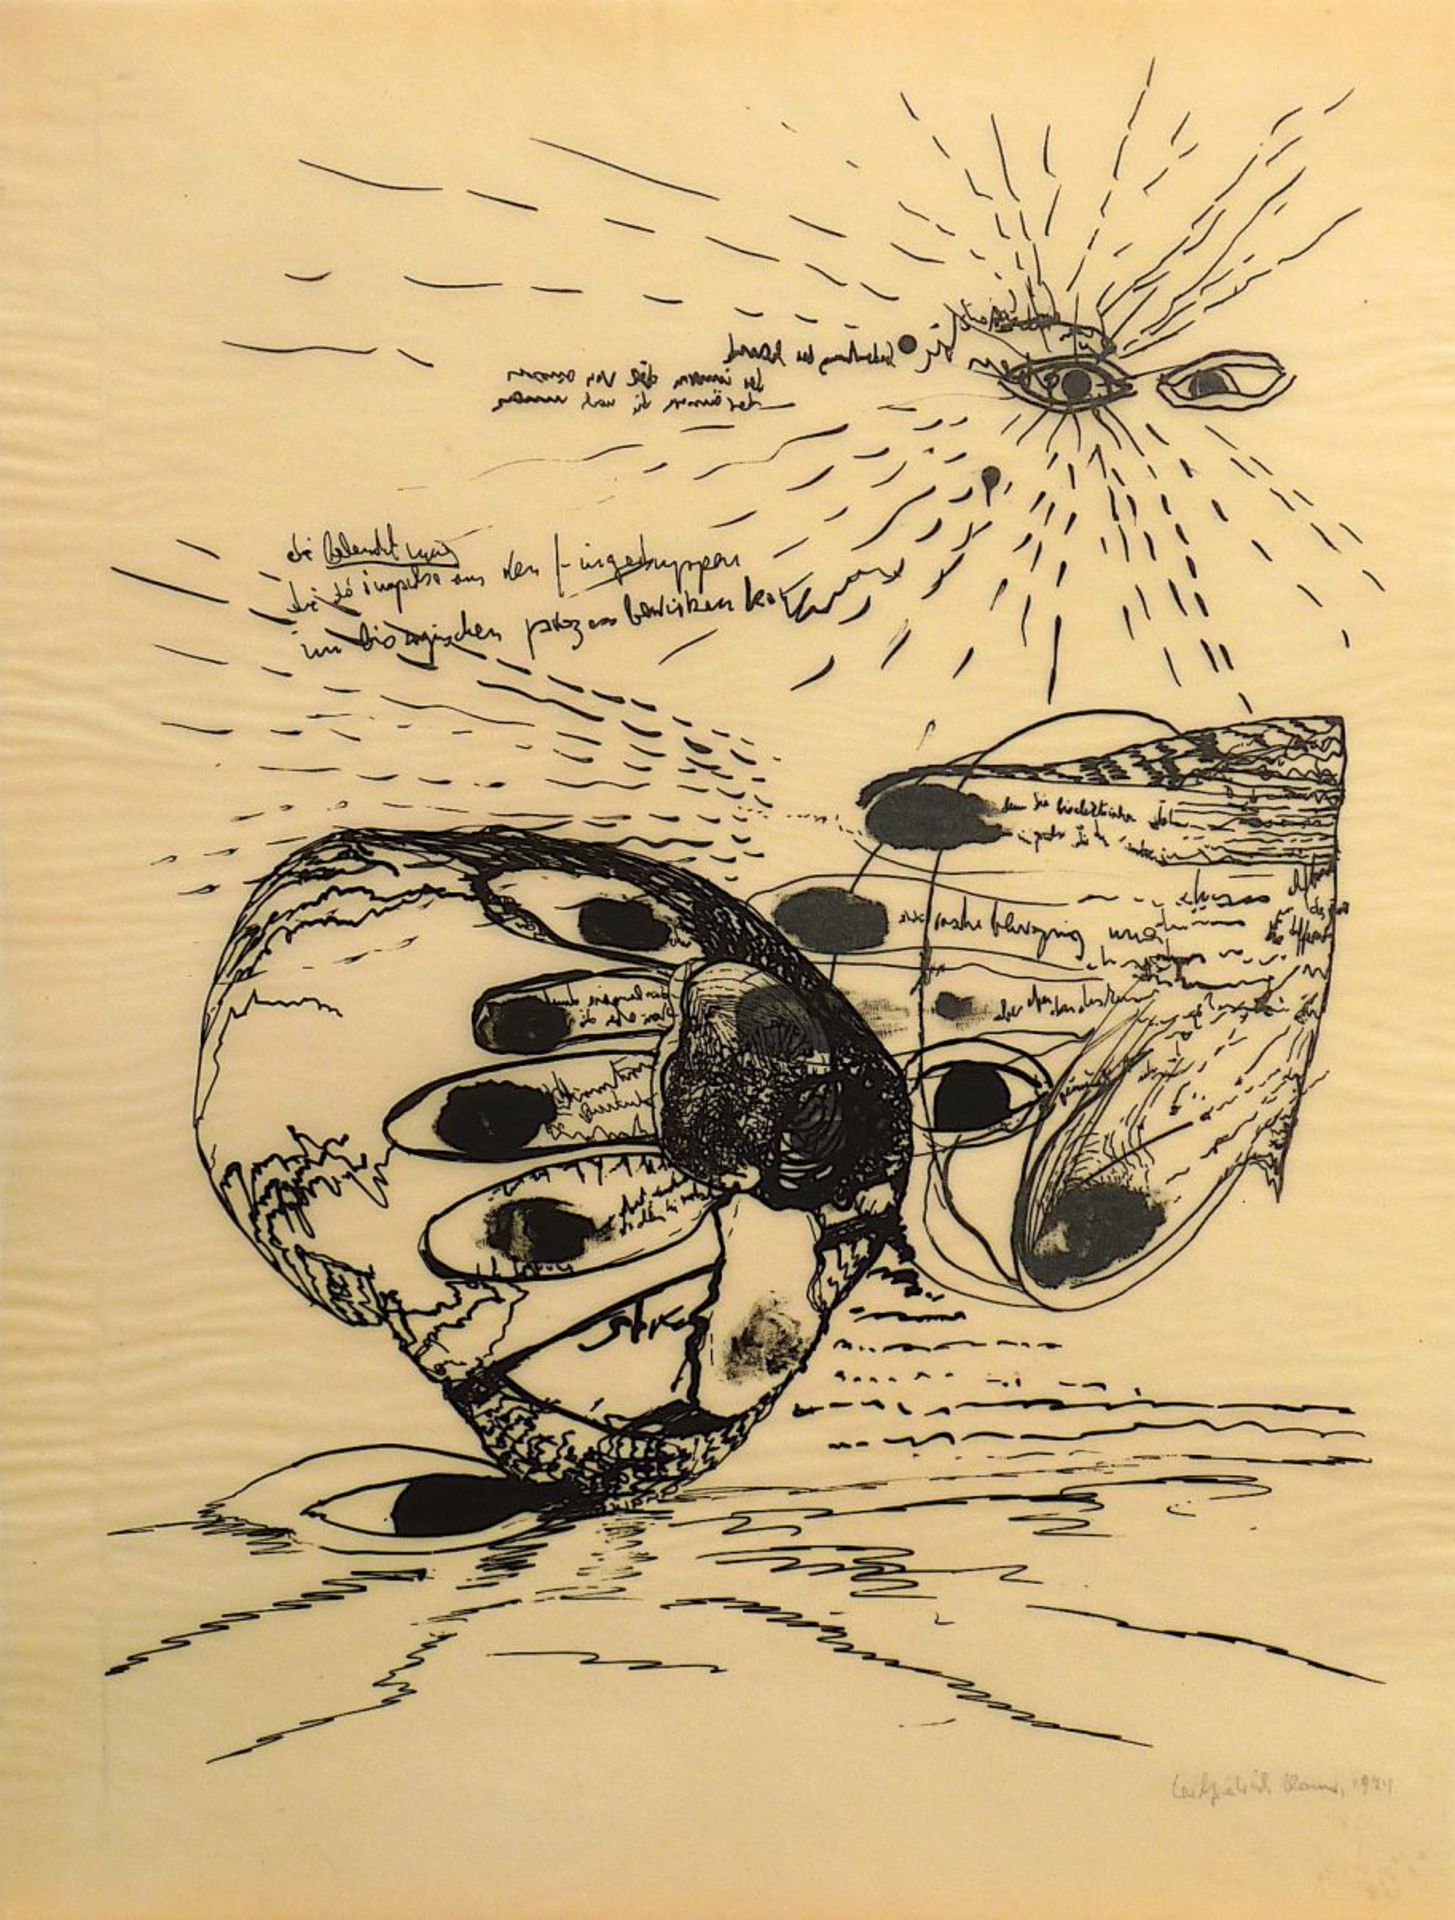 CLAUS, CARLFRIEDRICH: "Handreflexion", 1974 - Image 2 of 2